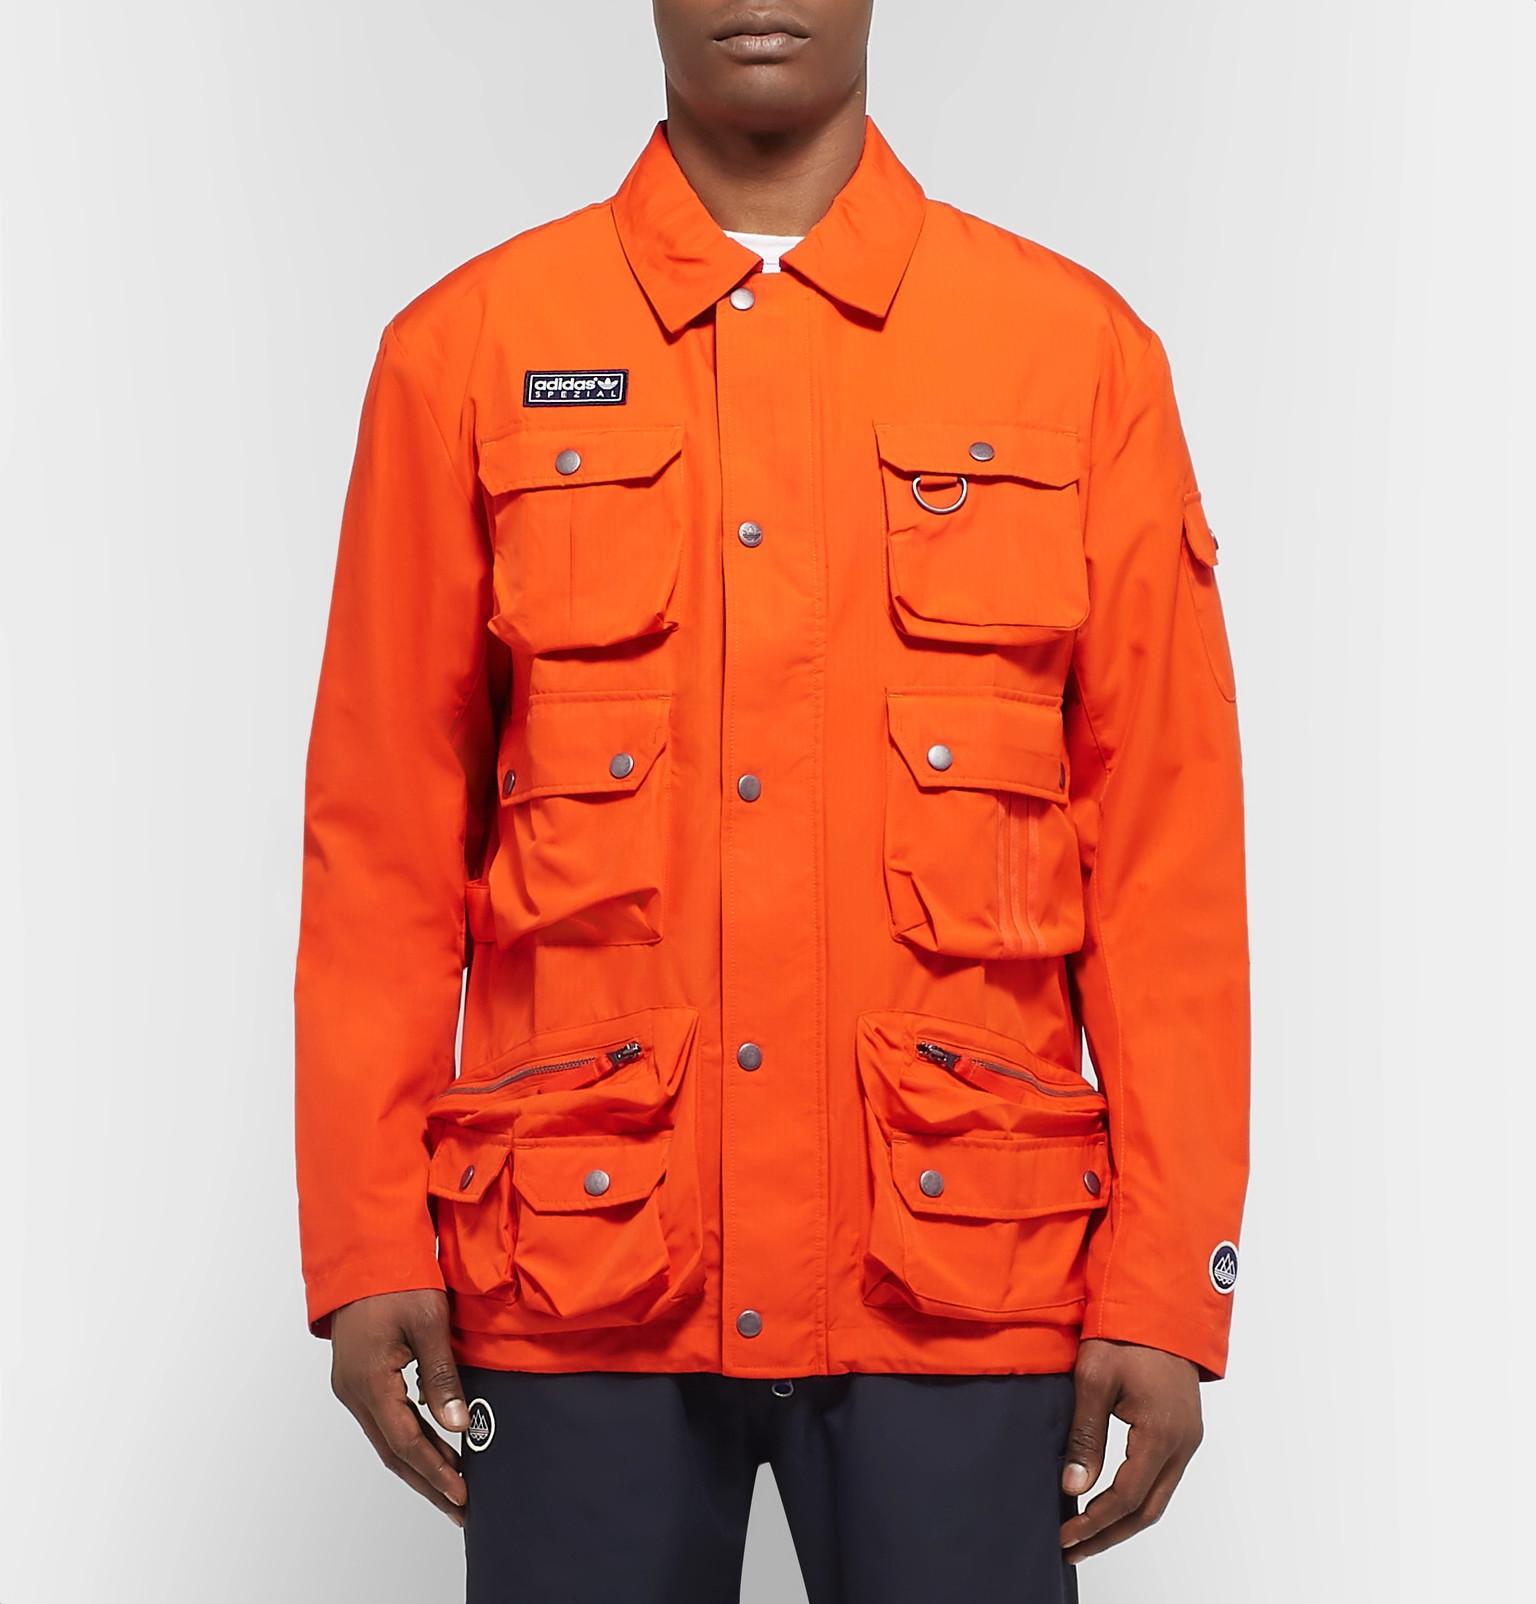 adidas spezial orange jacket - >Free